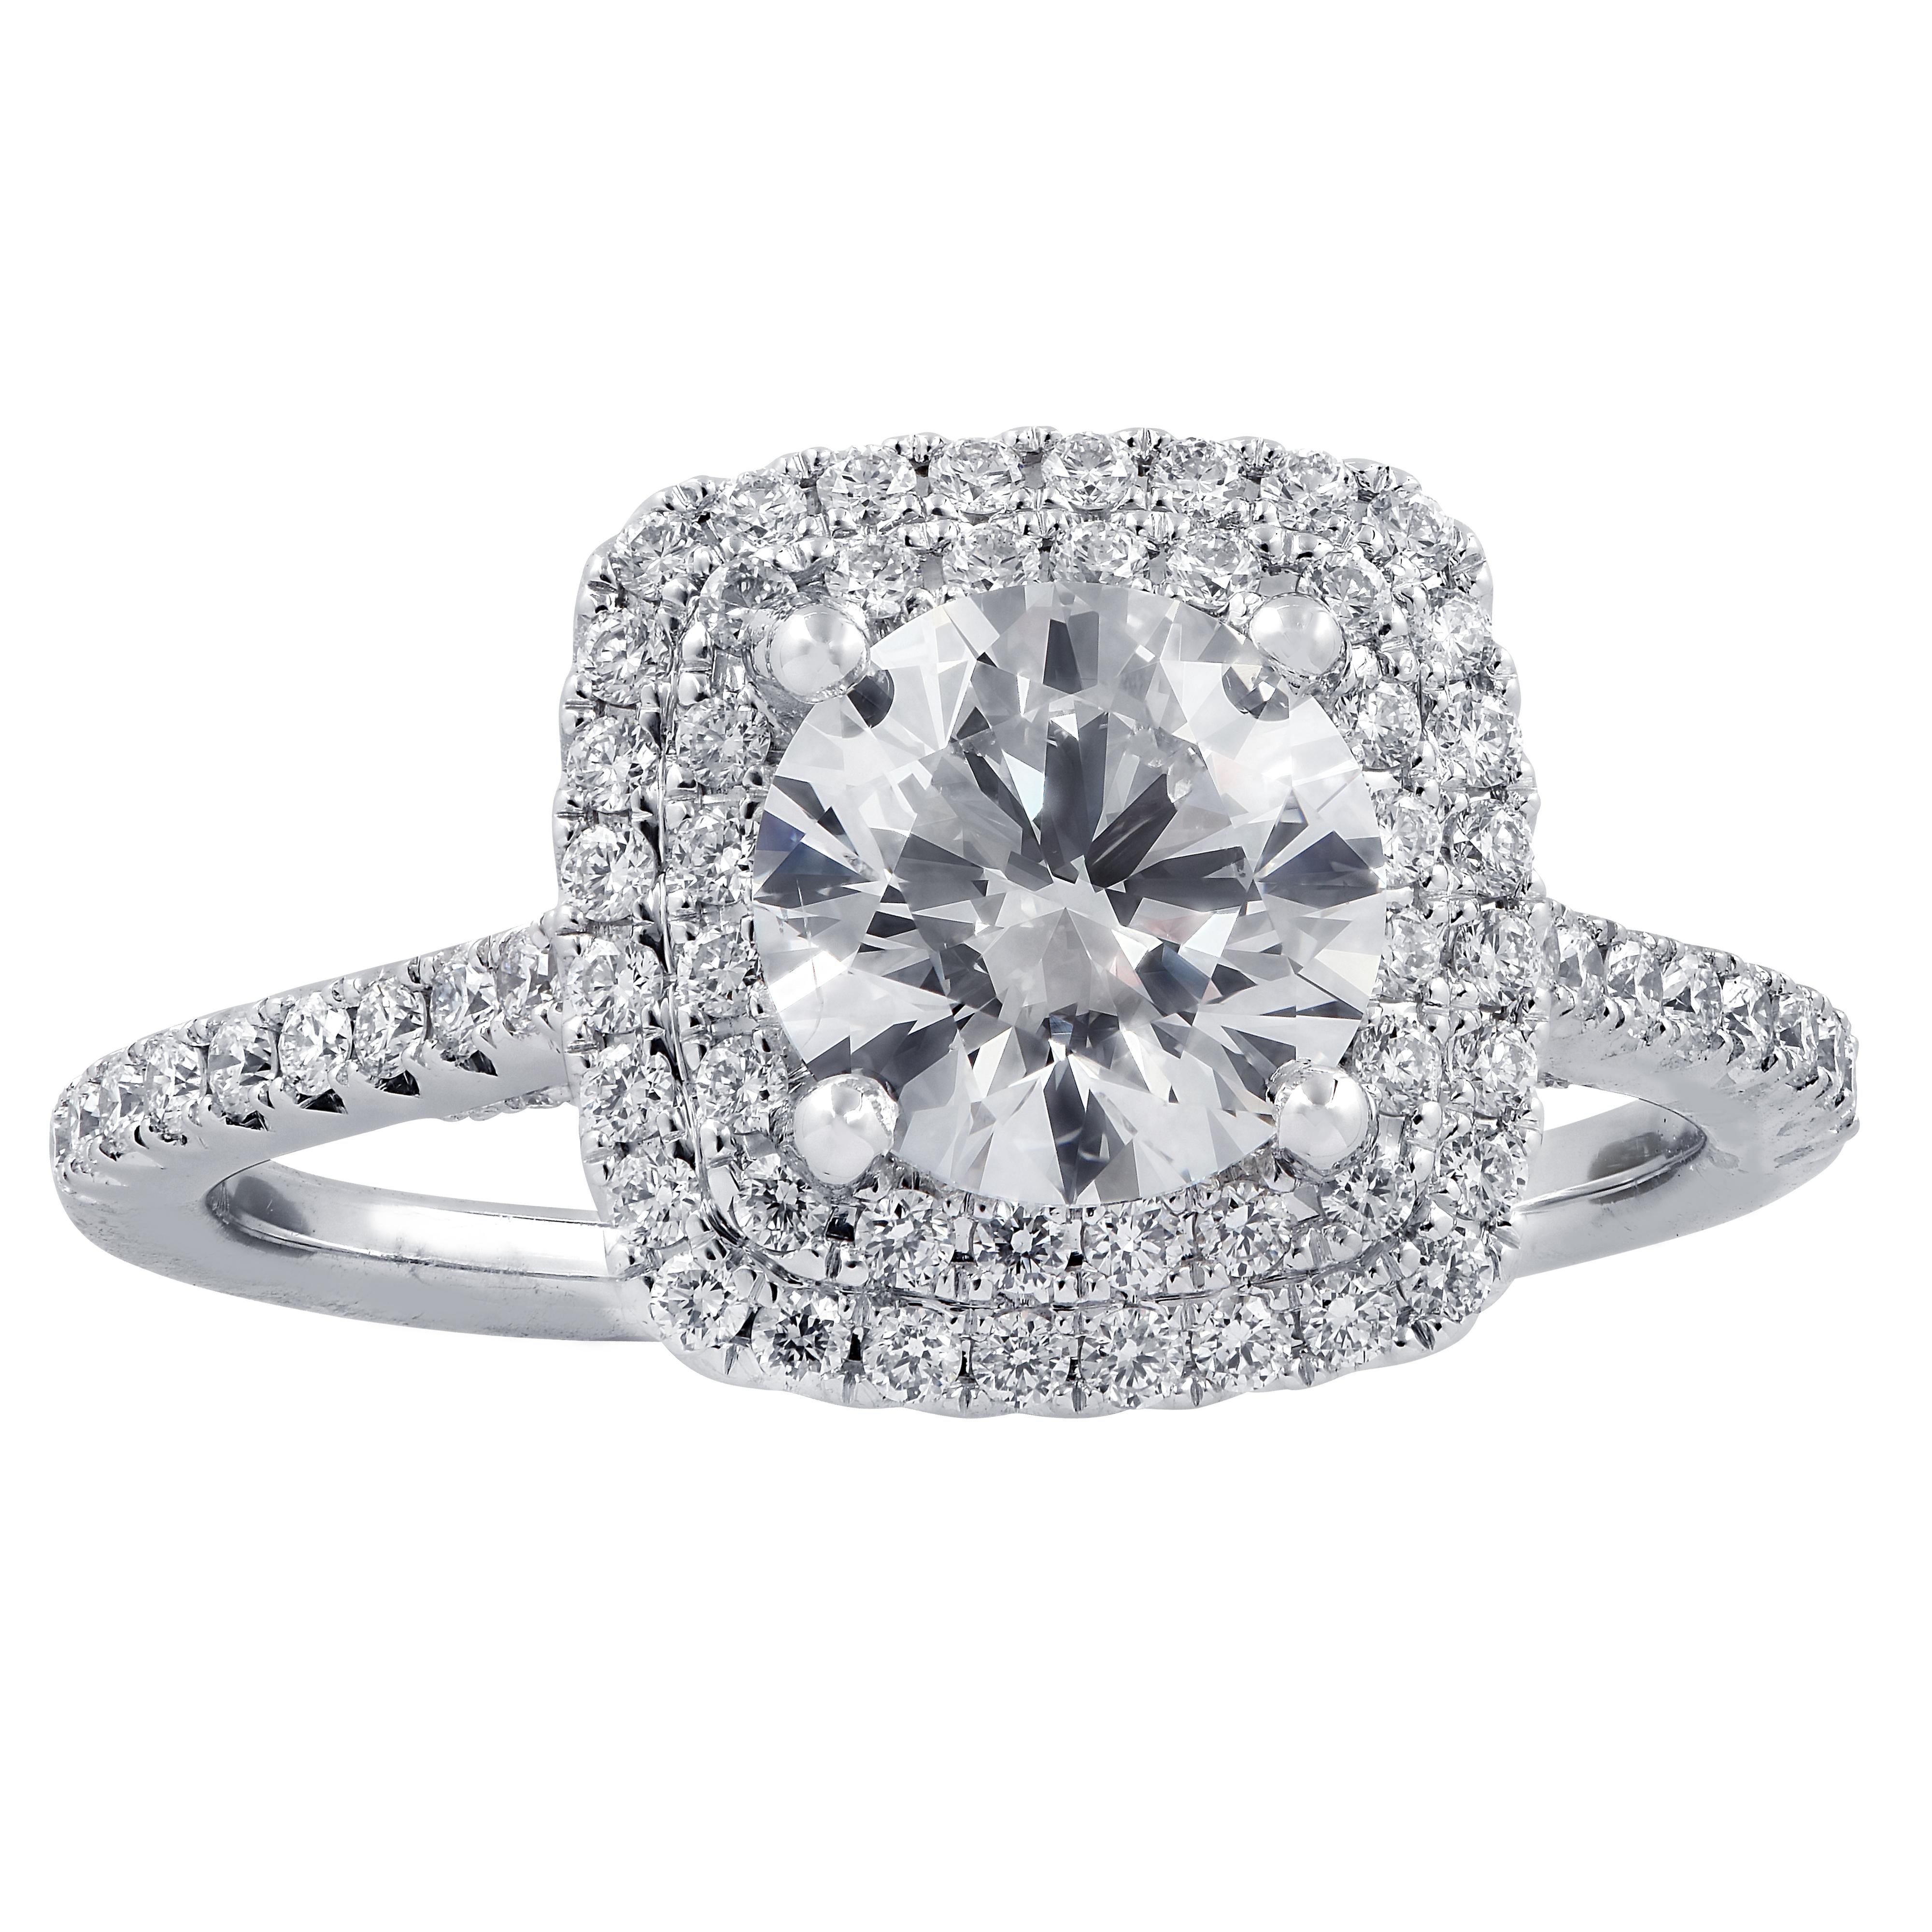 Round Cut Vivid Diamonds GIA Certified 1.27 Carat Diamond Halo Engagement Ring